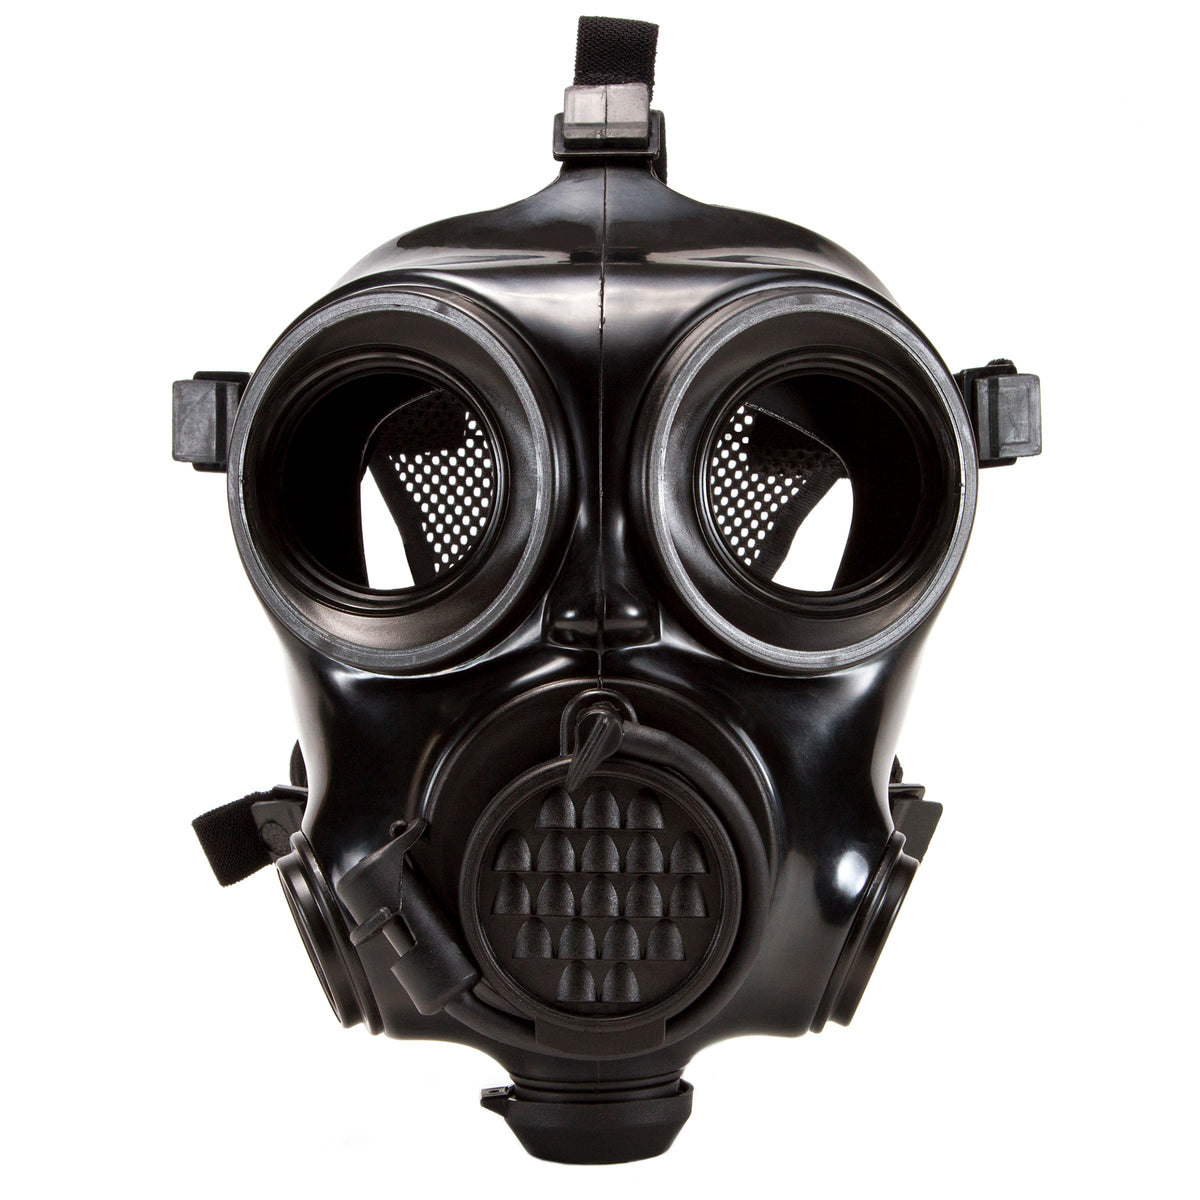 Modderig Wederzijds veld CM-7M Military Gas Mask | Chemical Warfare Gas Masks | MIRA Safety